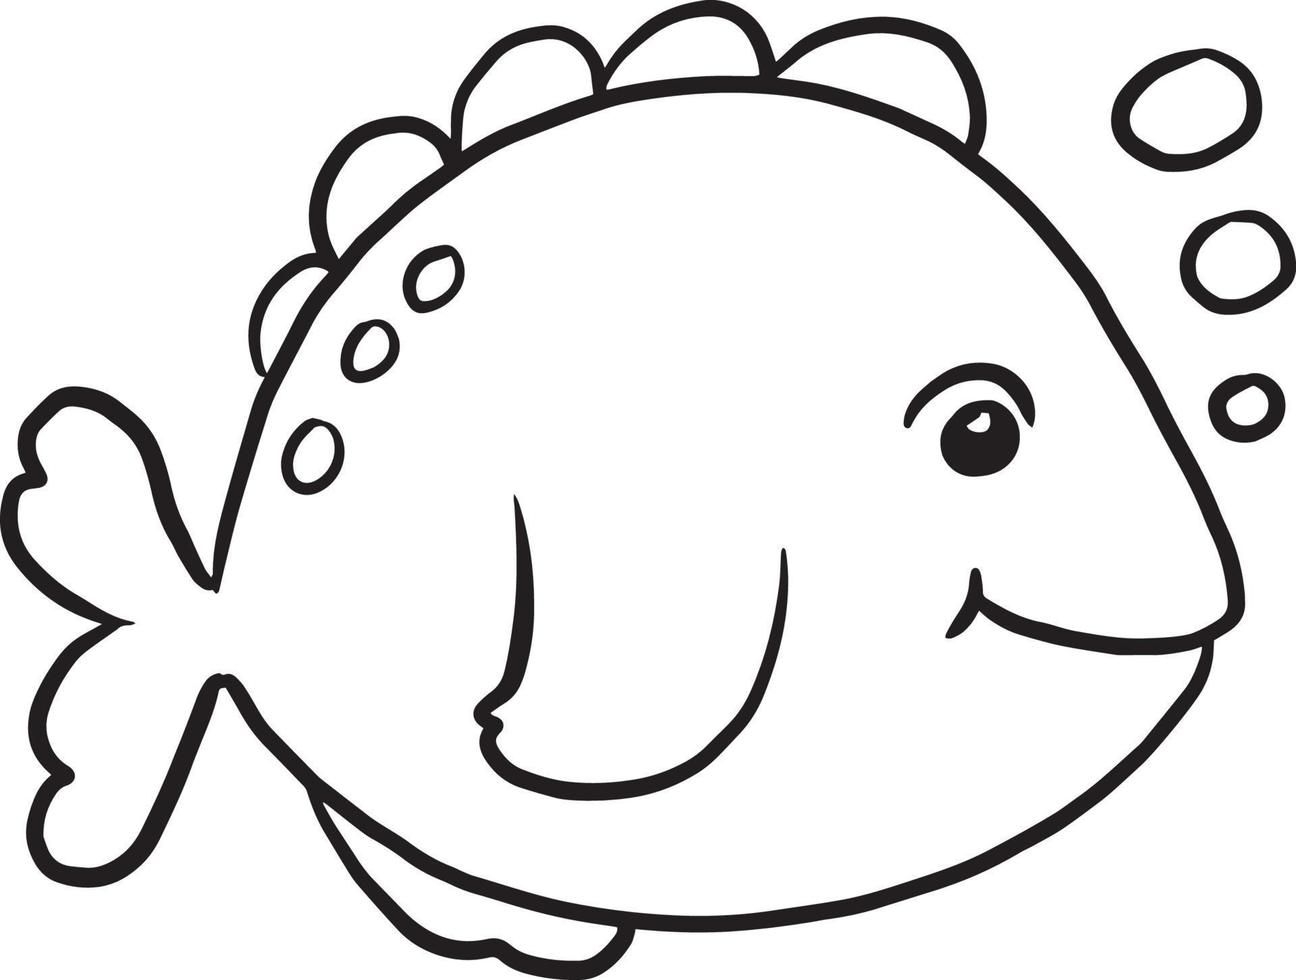 fish animal cartoon doodle kawaii anime coloring page cute illustration clip art character vector